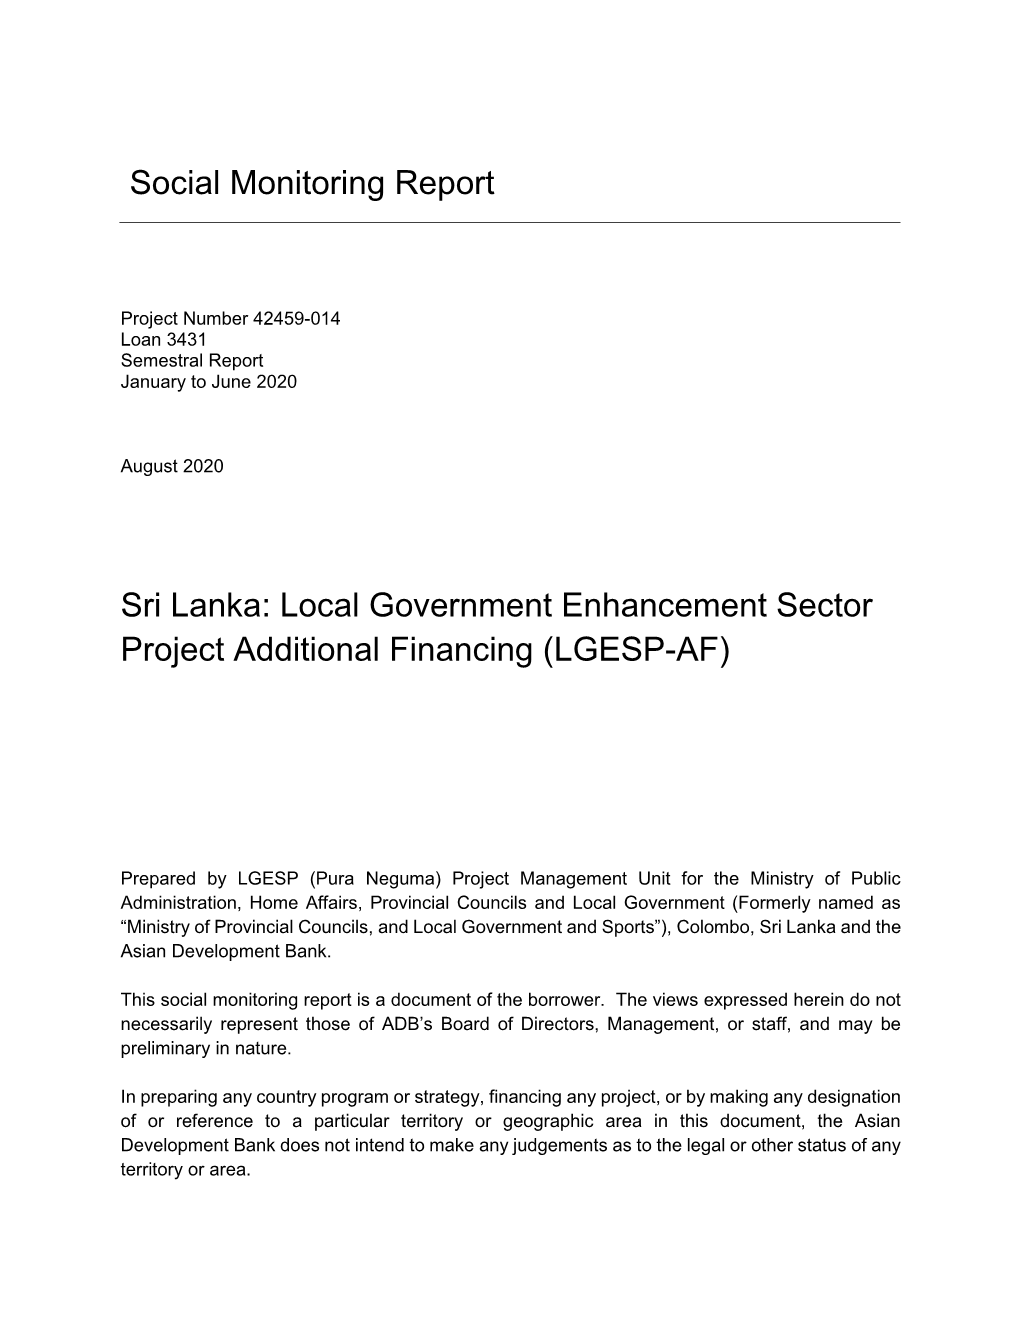 Social Monitoring Report Sri Lanka: Local Government Enhancement